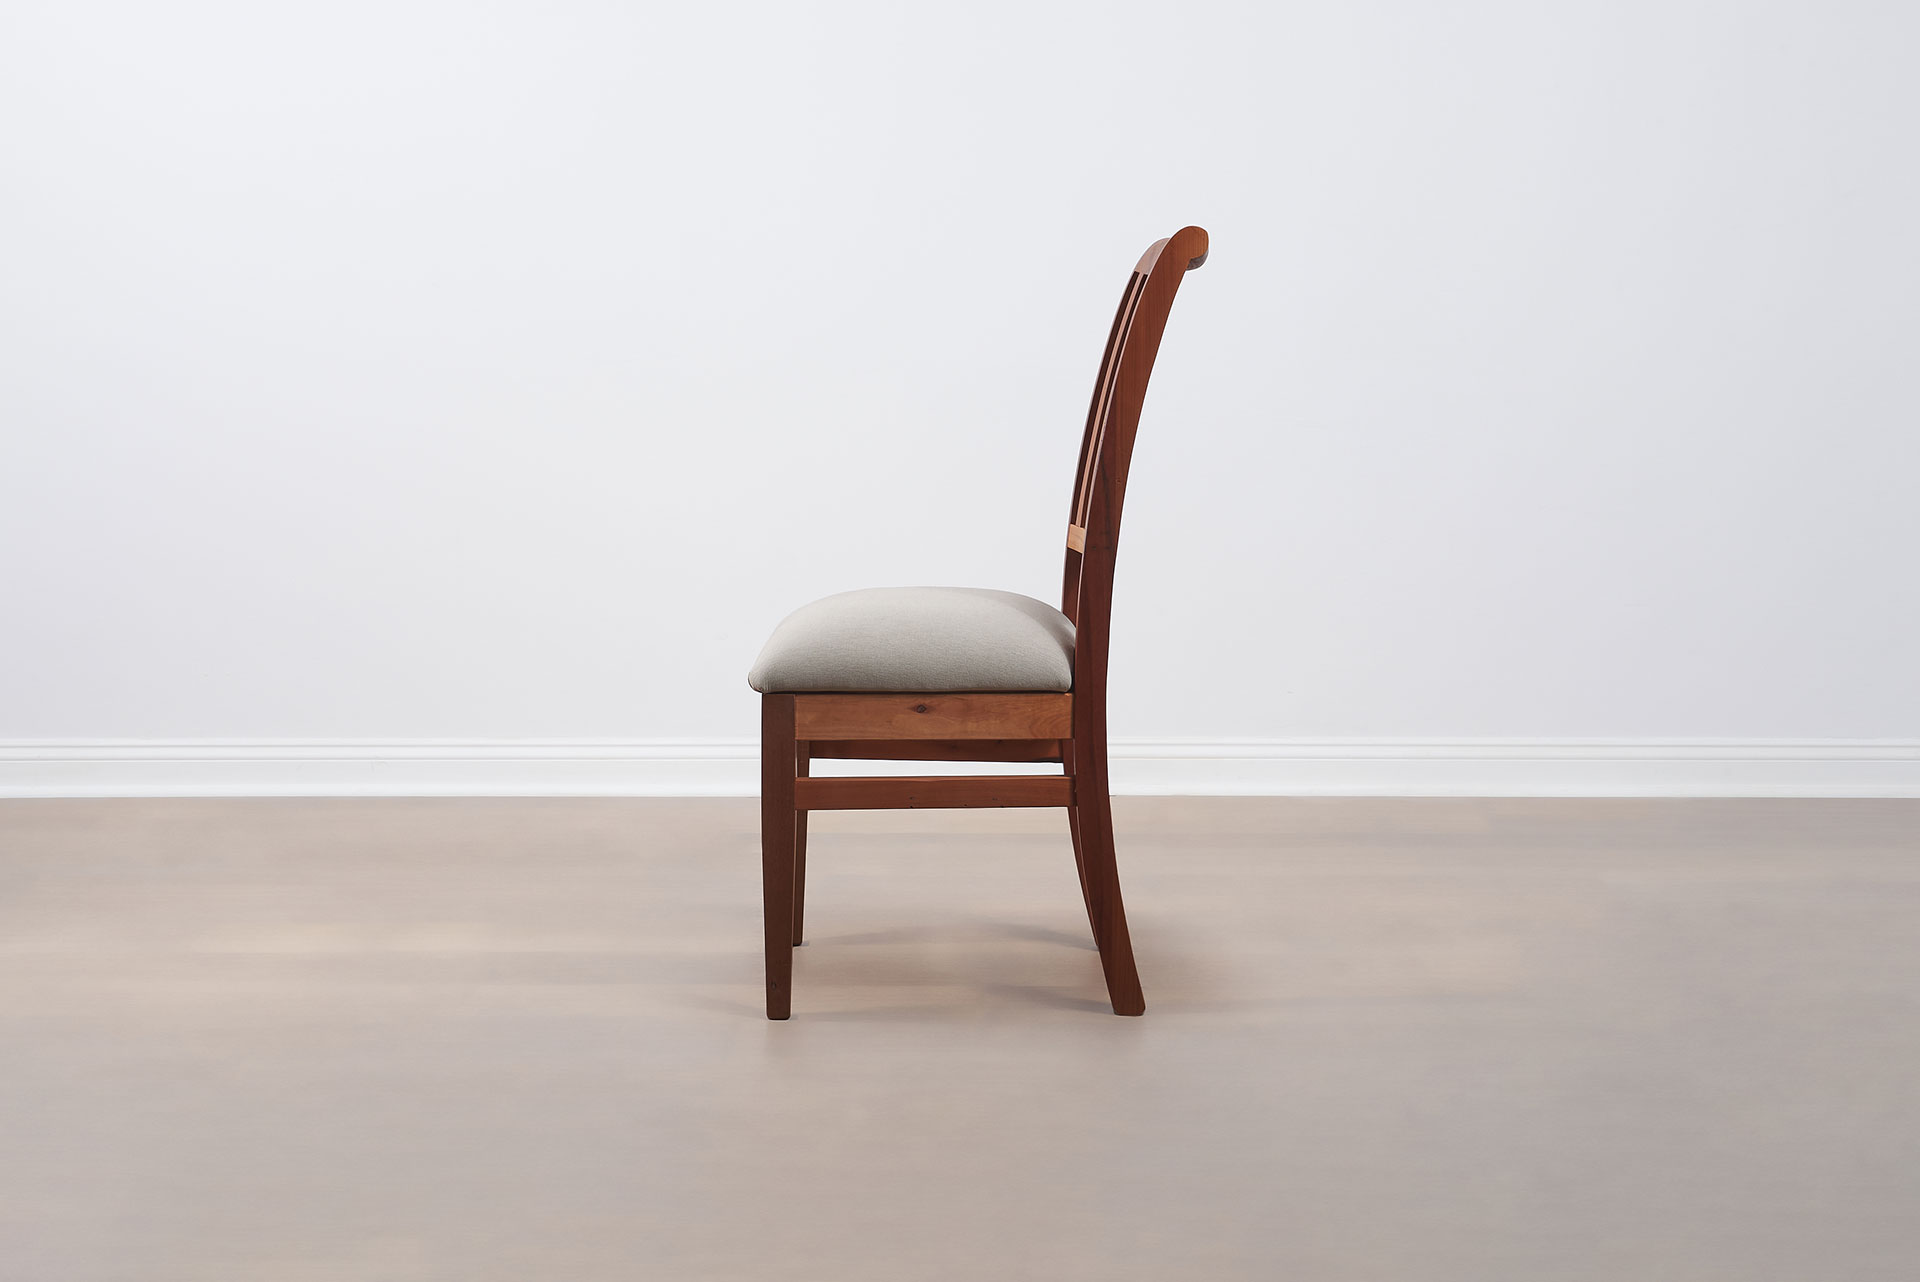 Muebles-Santander_Silla-Lilen_4616_silla_madera_textil